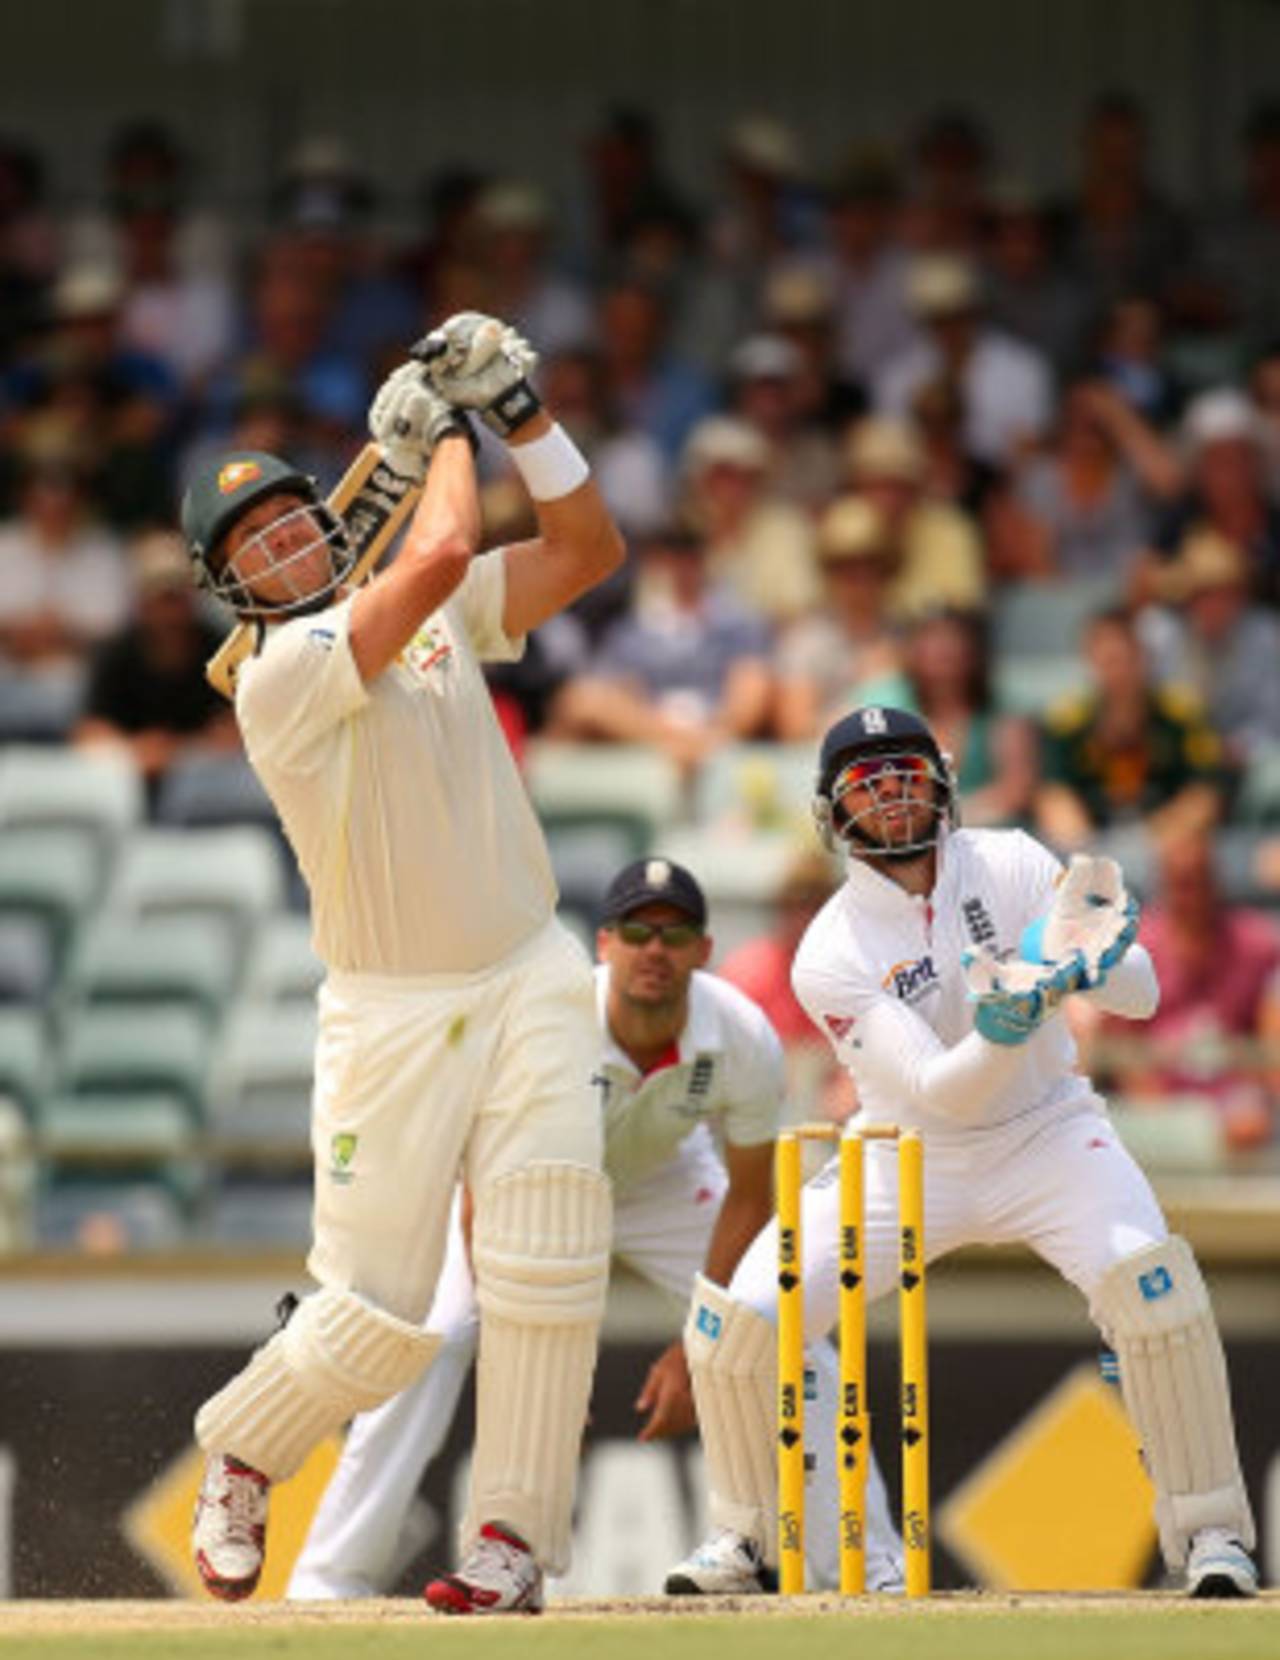 Shane Watson took on Graeme Swann during the first hour, Australia v England, Test, Perth, 4th day, December 16, 2013